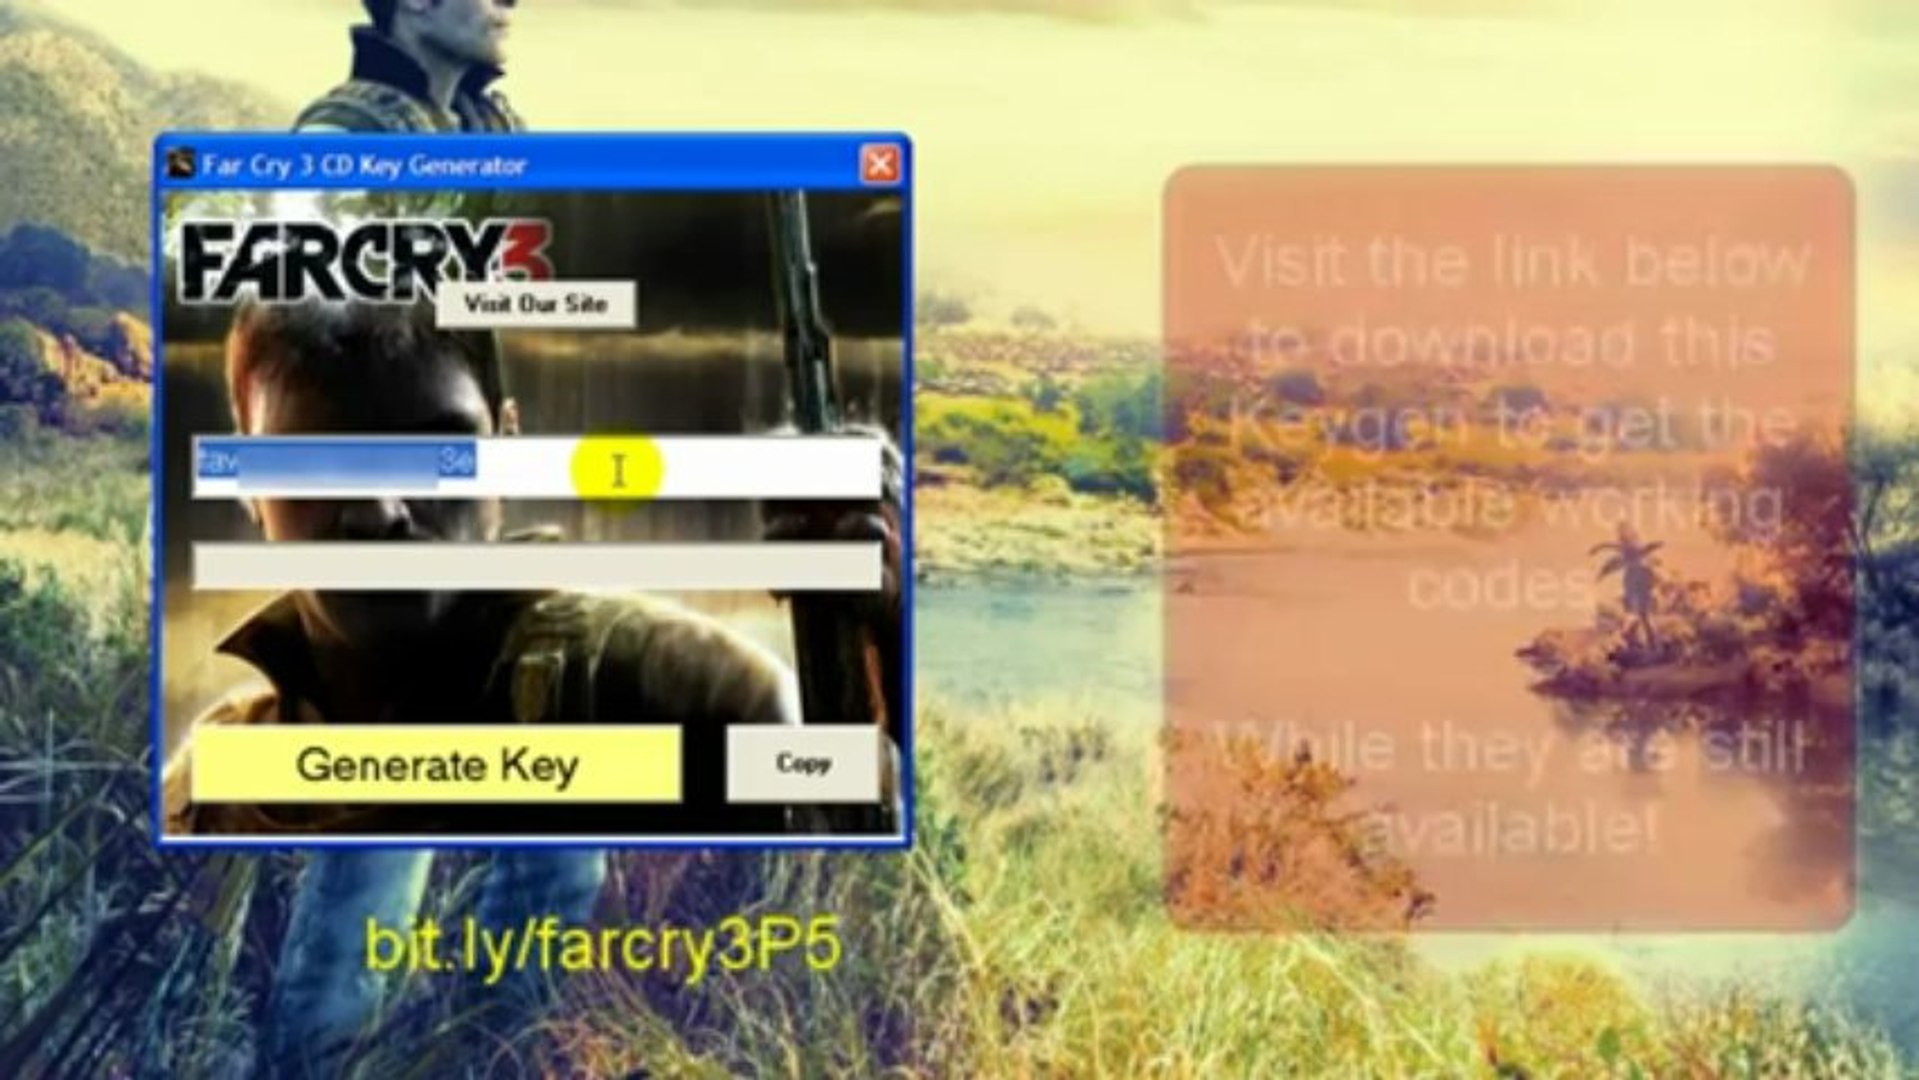 Far Cry 3 CD Key Generator Free Download - video dailymotion